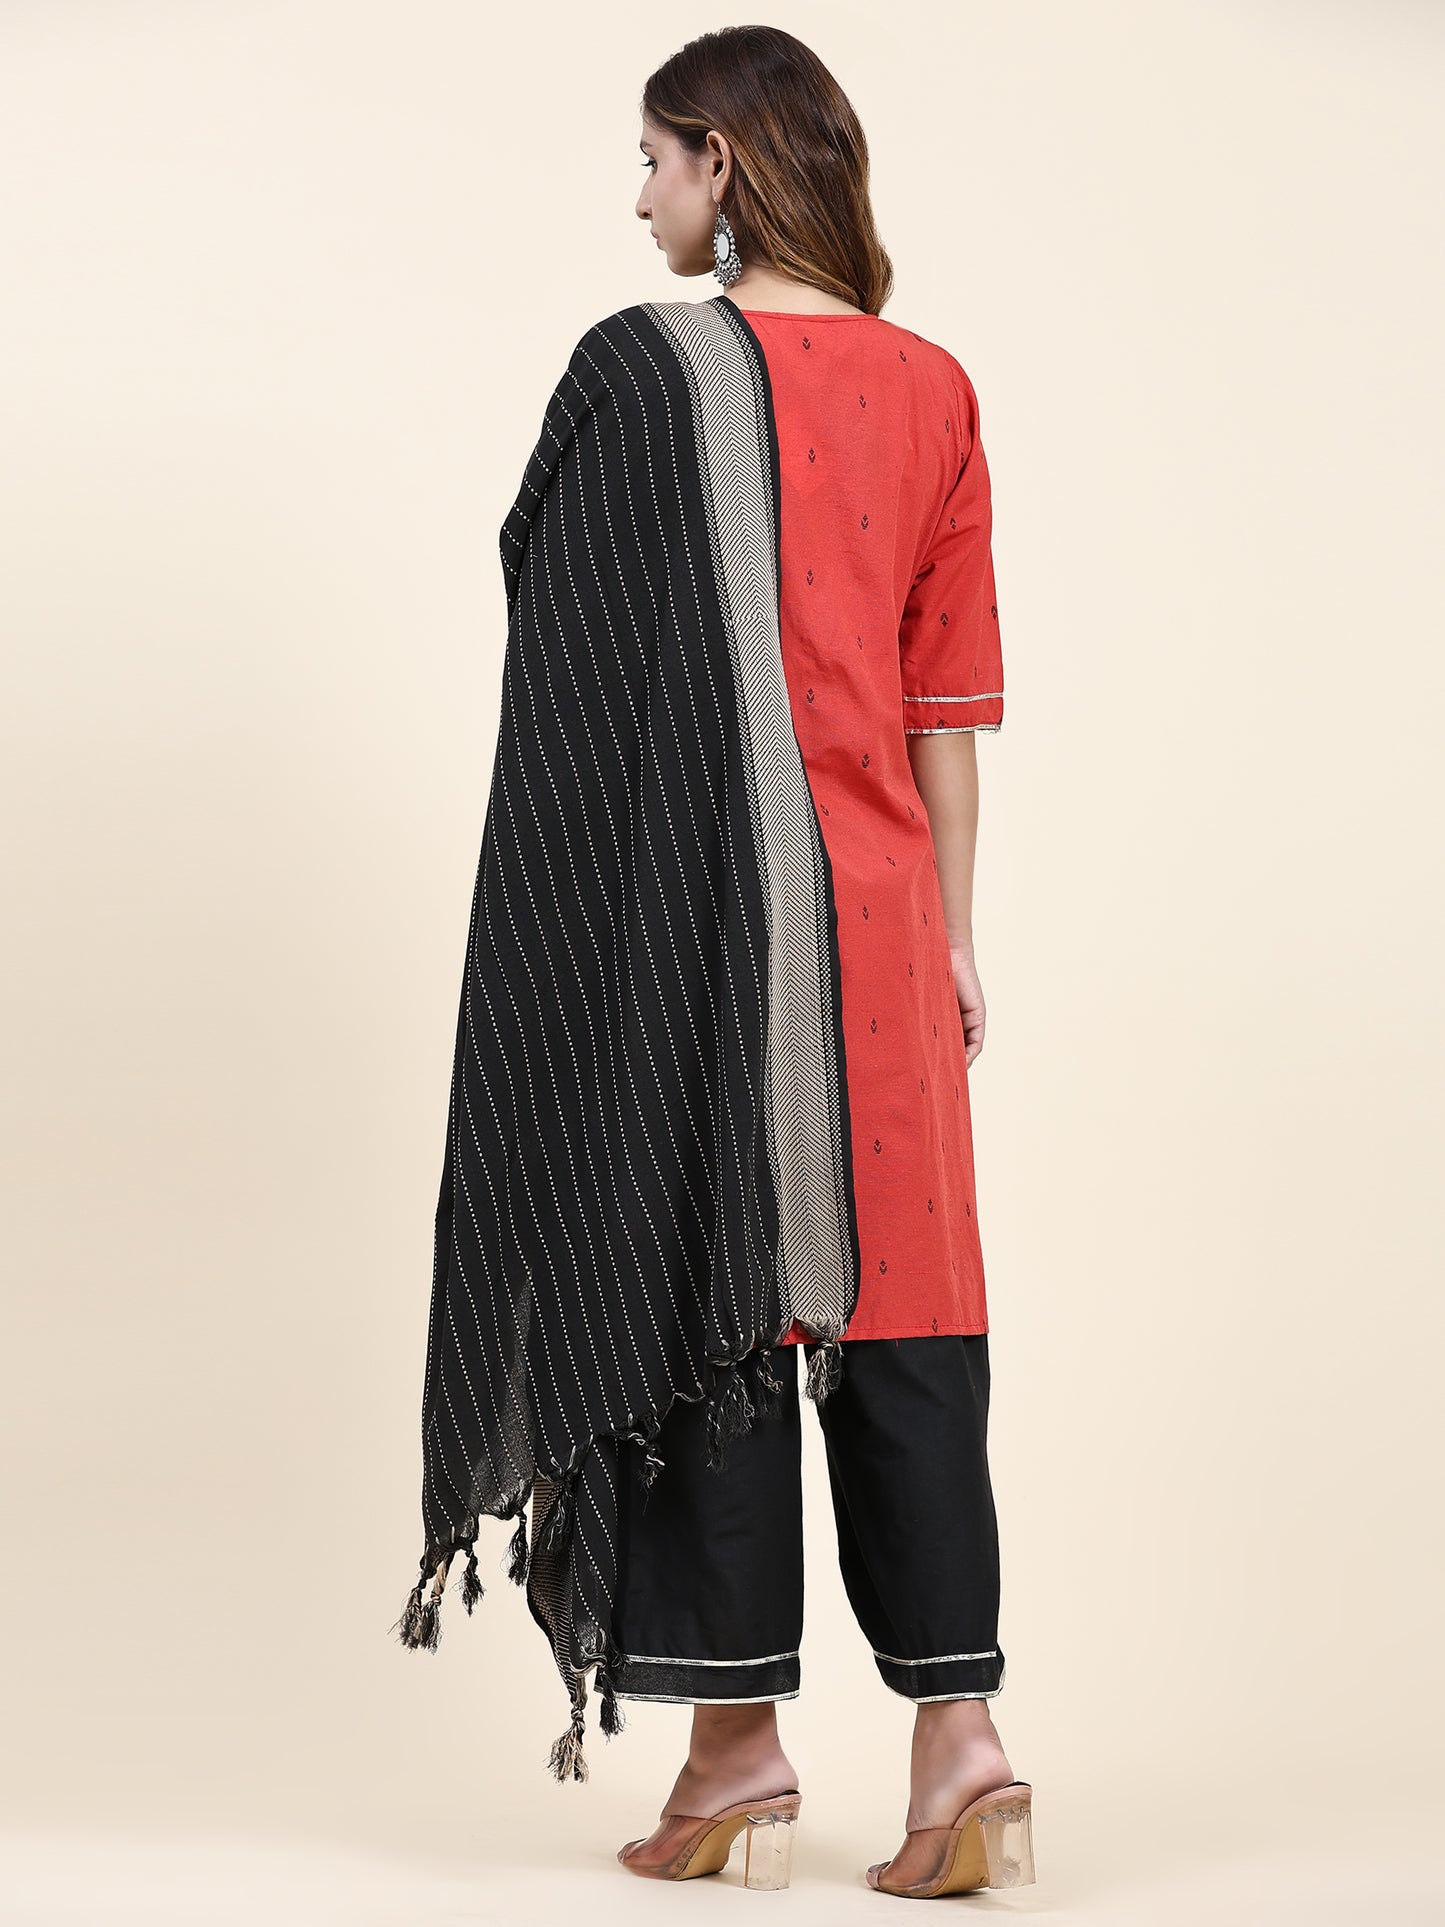 ANUSHIL Women's Cotton Kurta Plazzo Dupatta Set - Graceful Lace Detailing and Comfortable 3/4 Sleeves (Red)